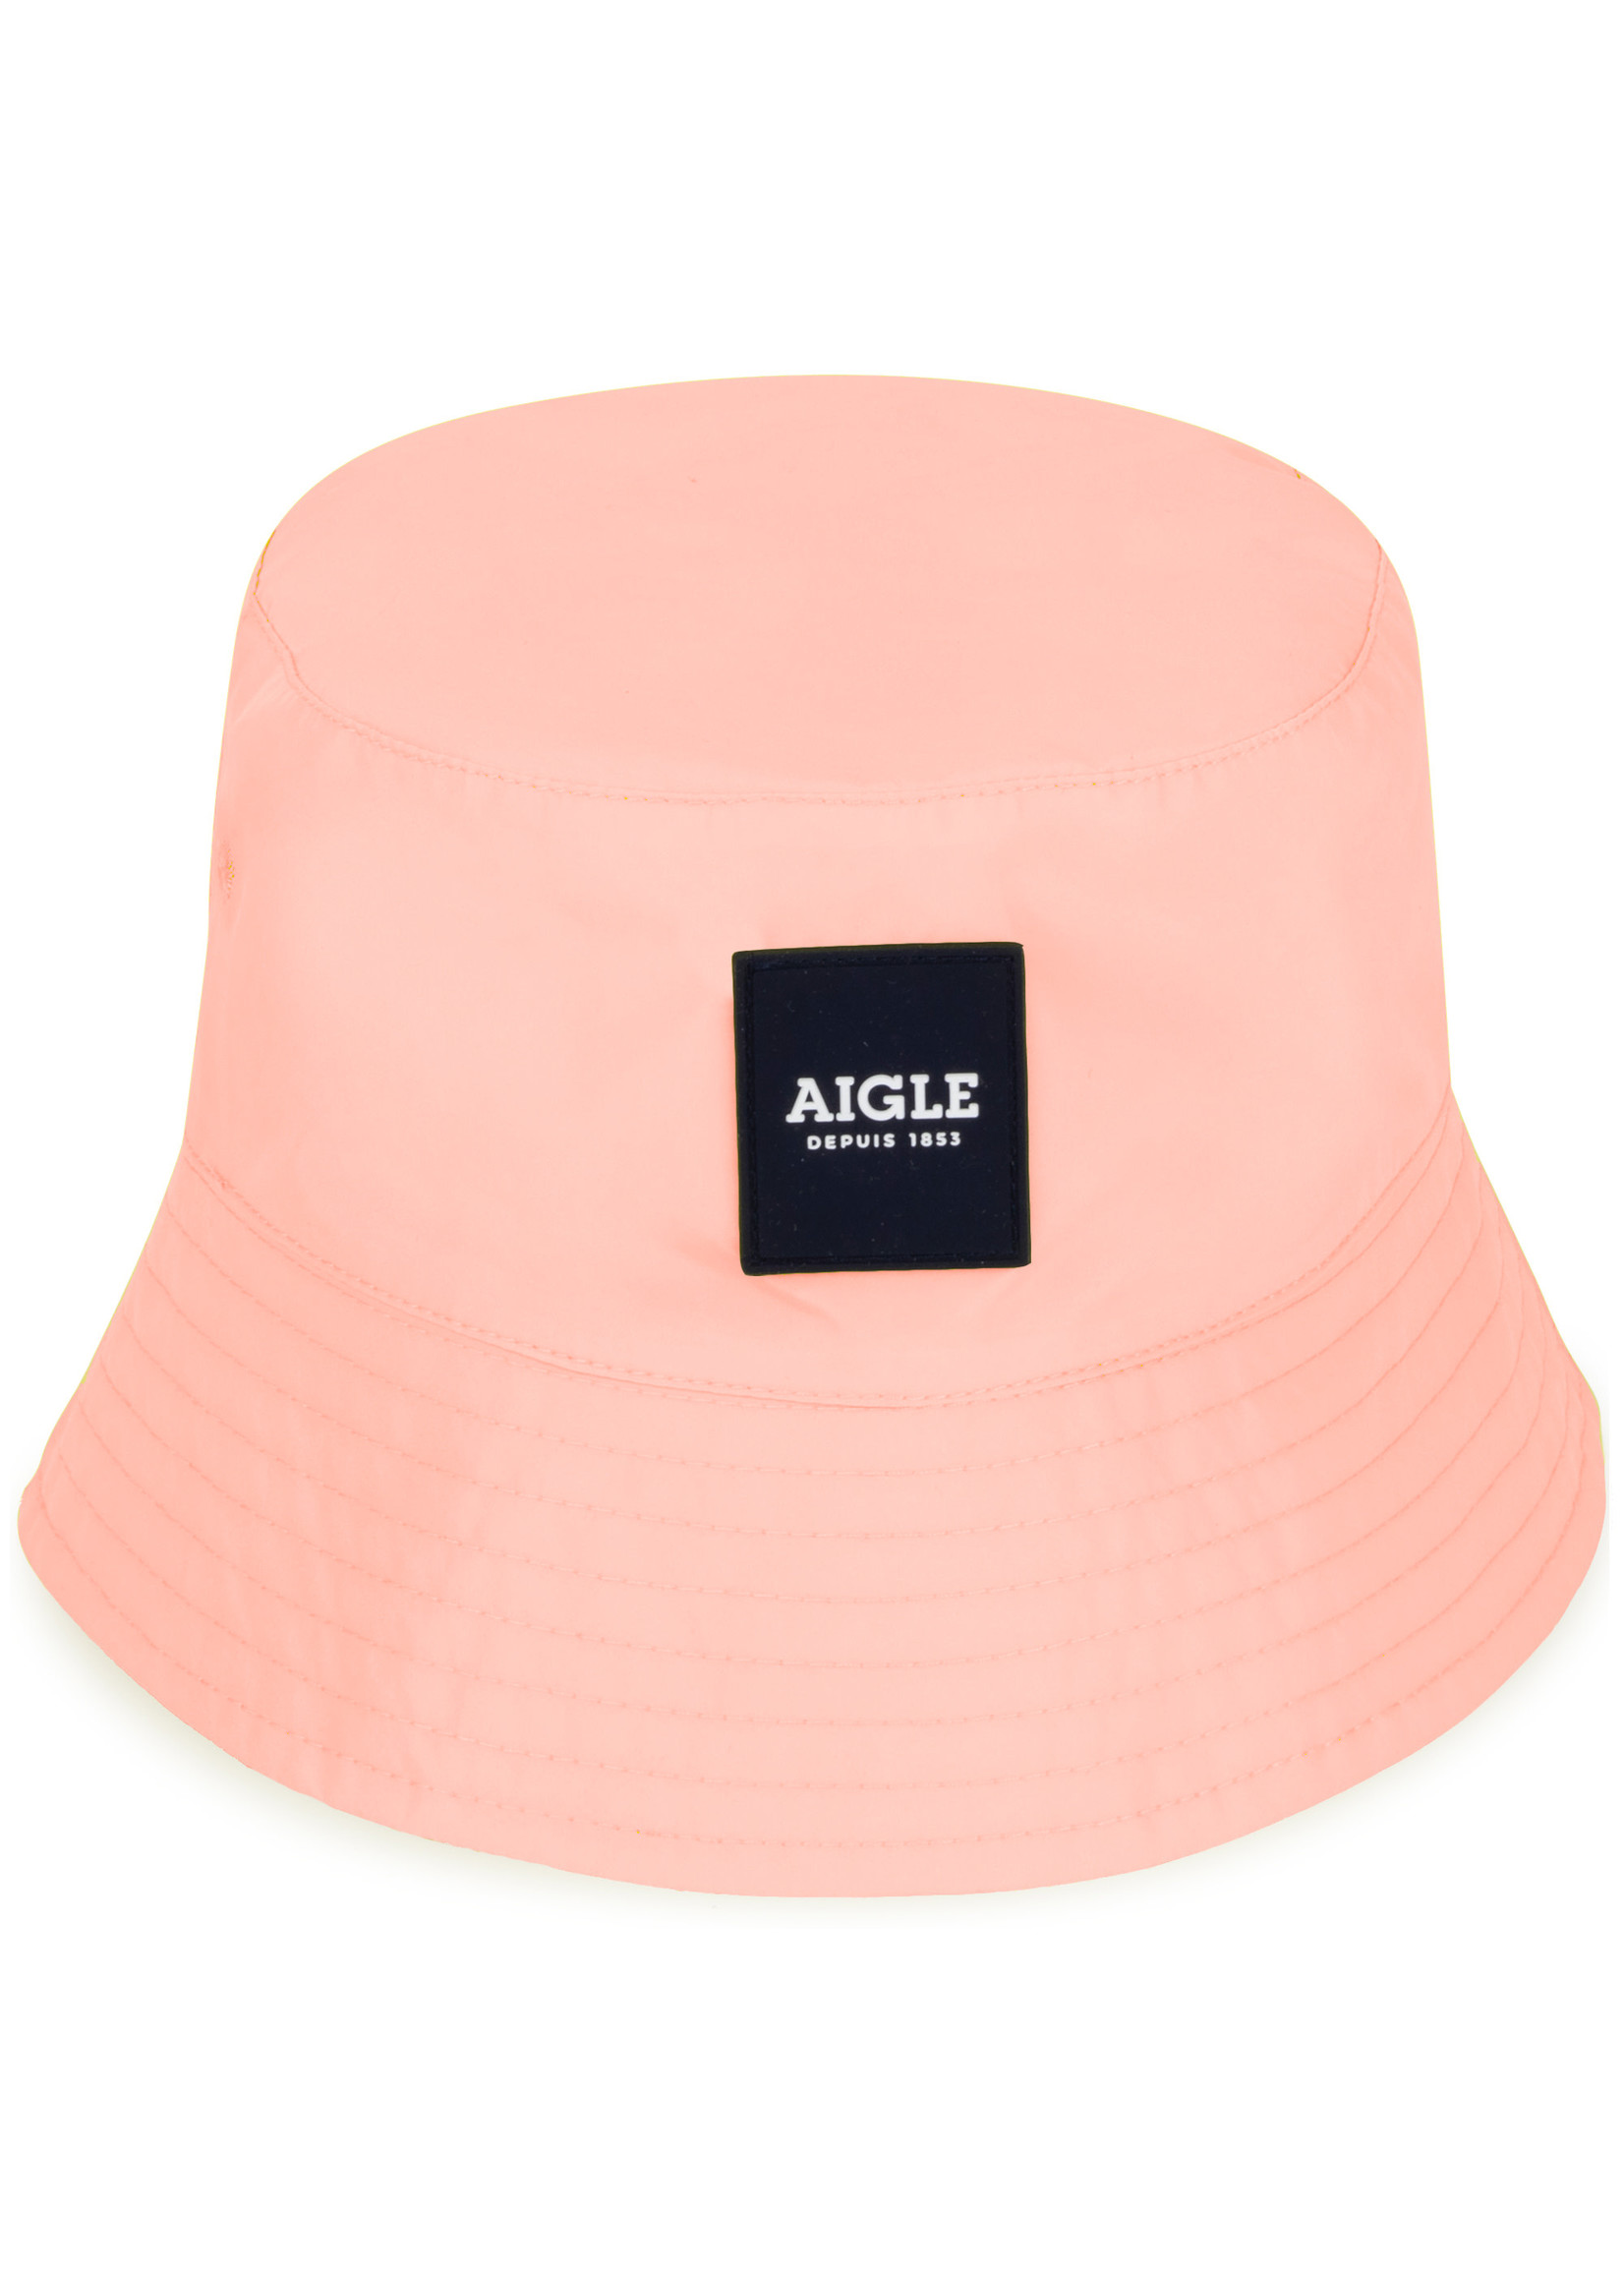 Aigle Aigle bucket rain hat soft pink - M51004